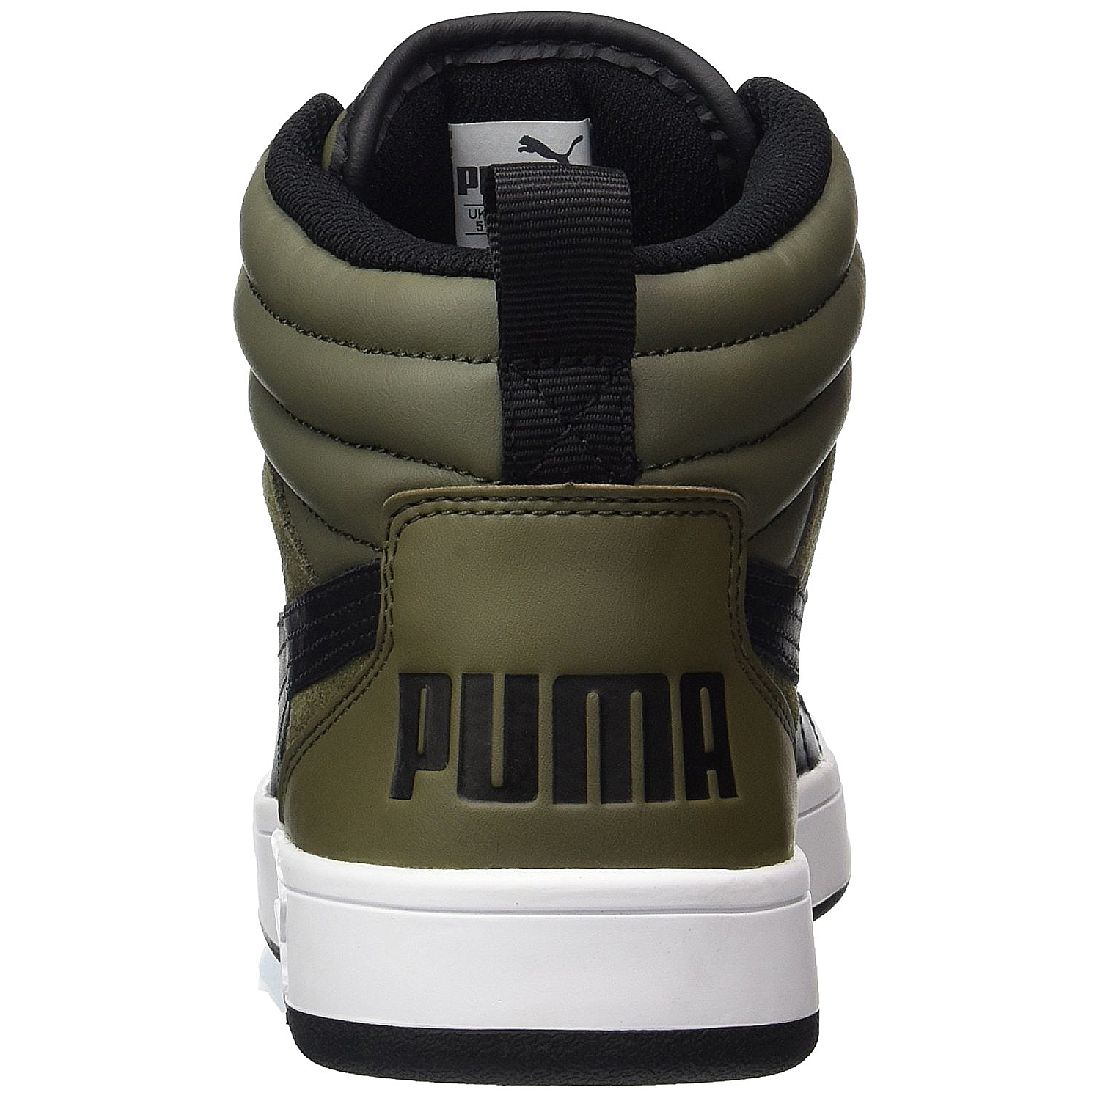 Puma Rebound Street V2 Sneaker Herren Schuhe olive 363715 04